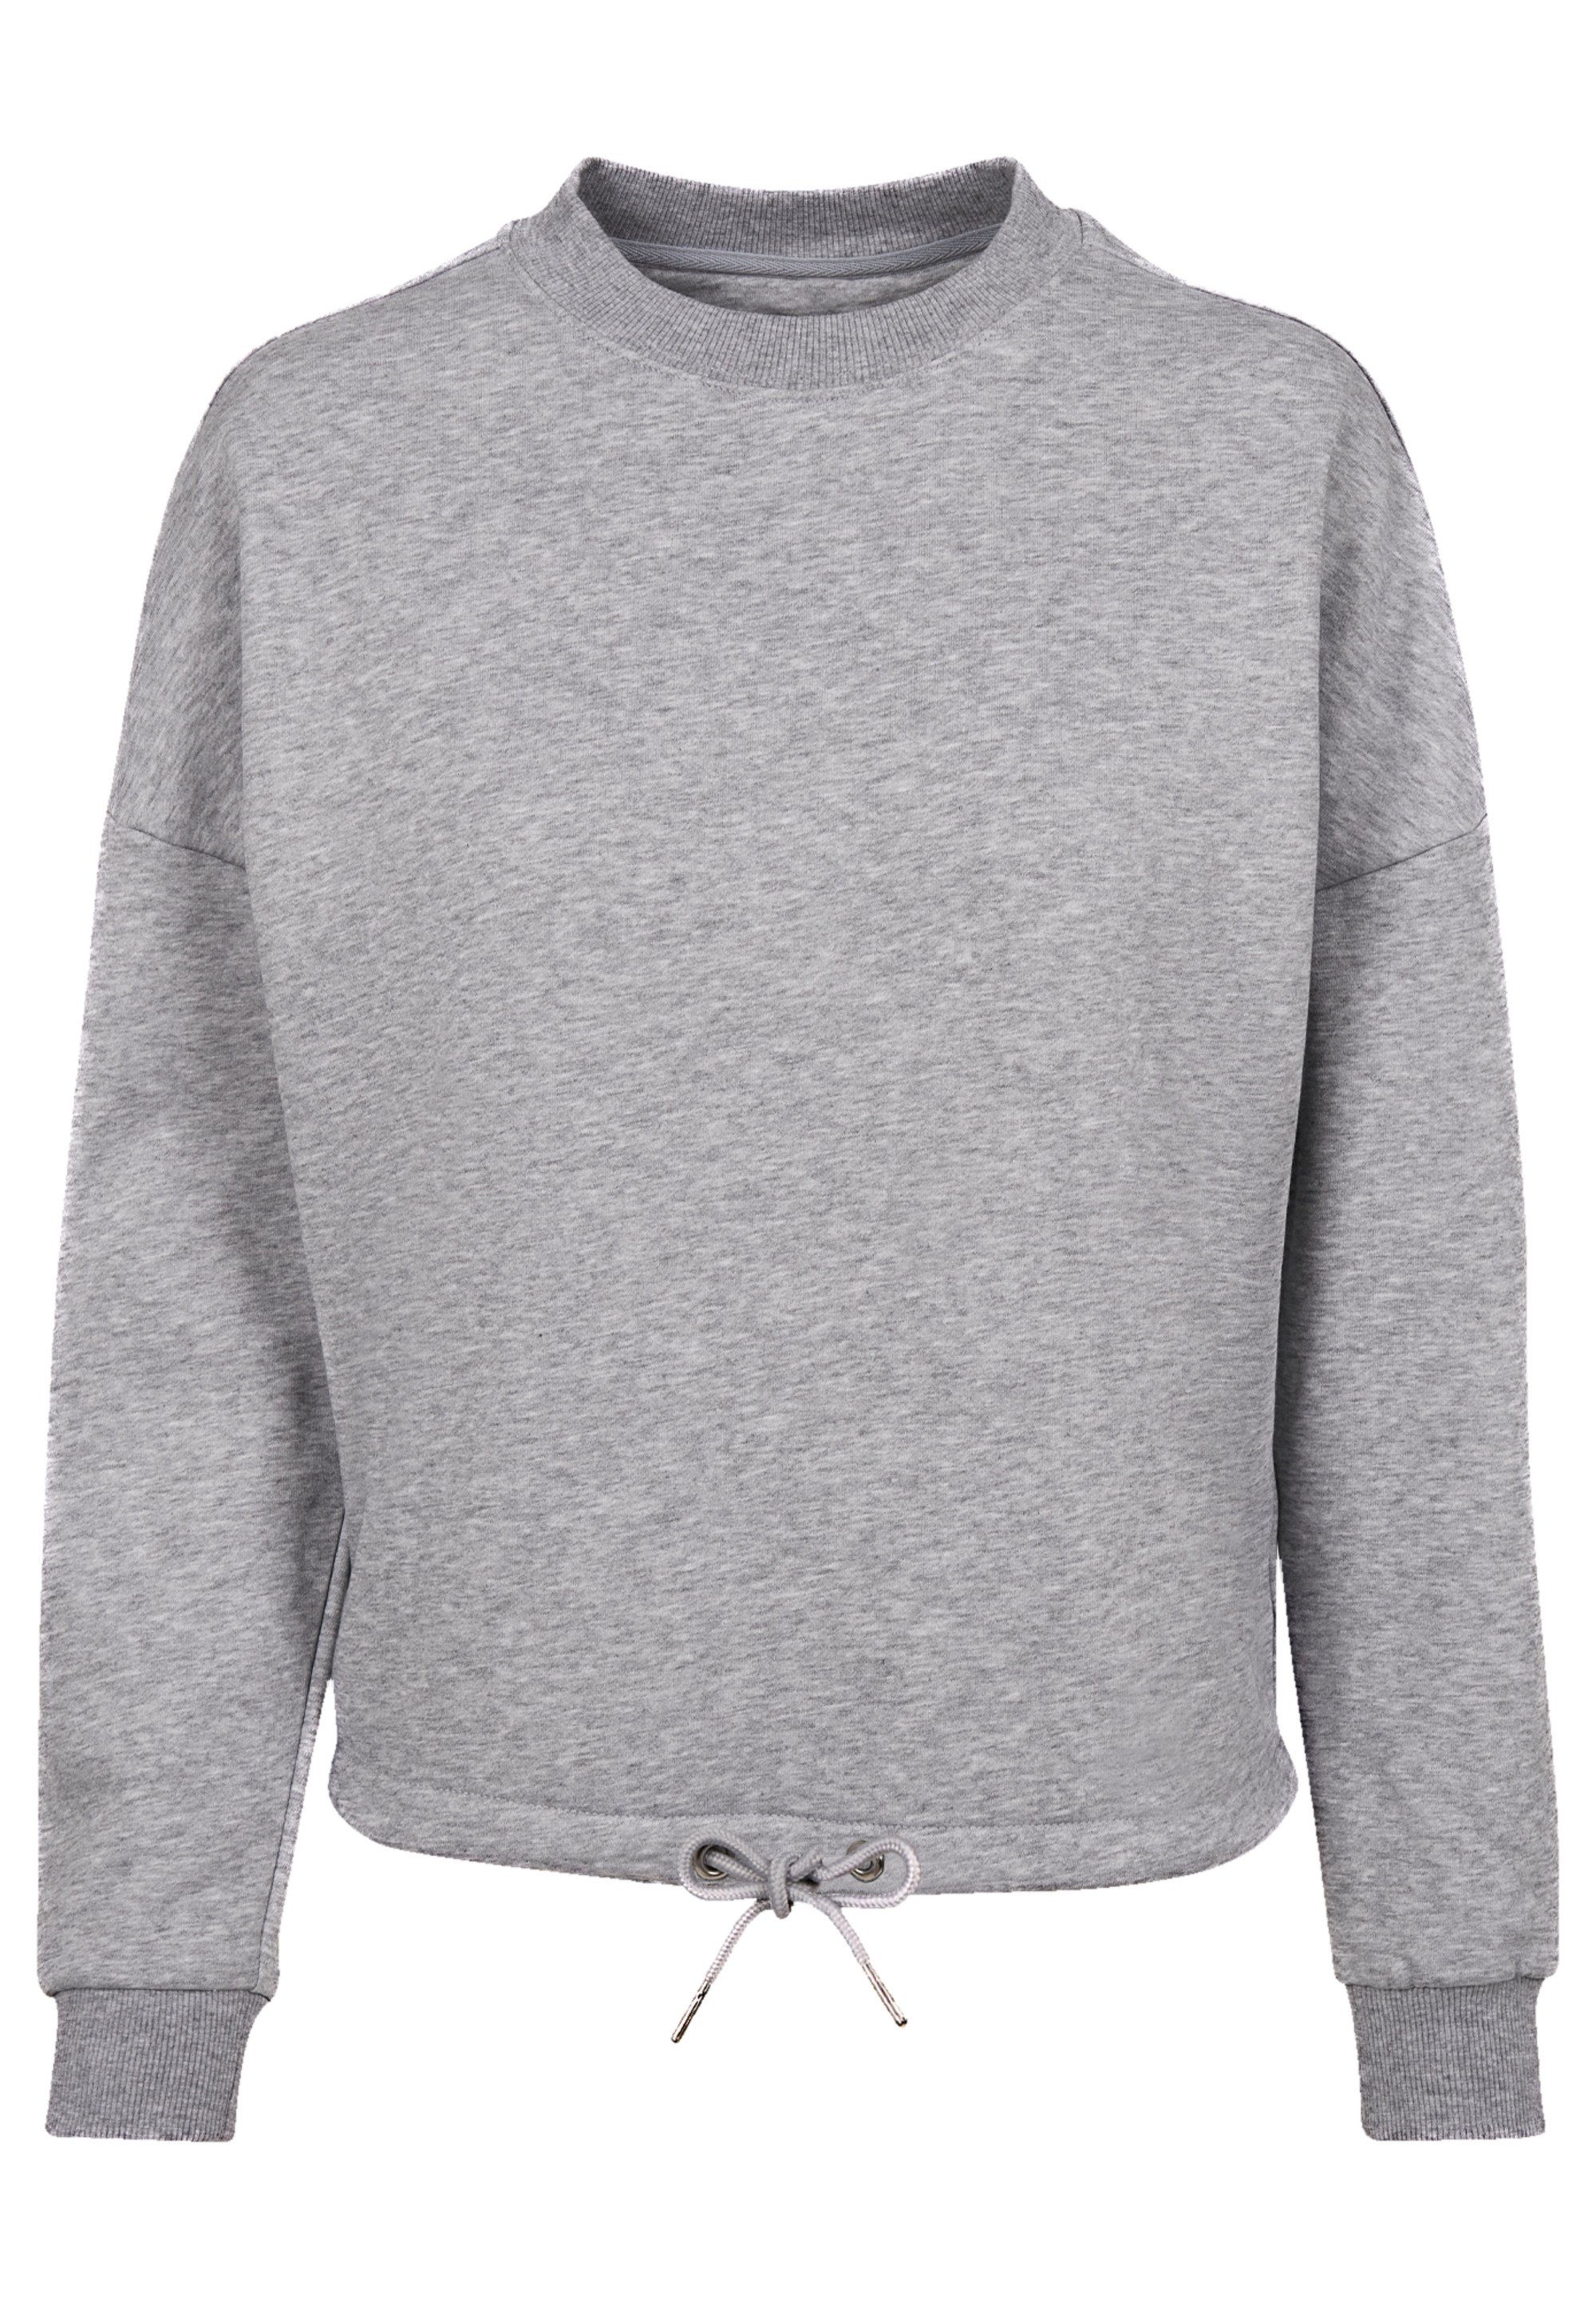 F4NT4STIC Sweatshirt Sunny Print side heather grey up